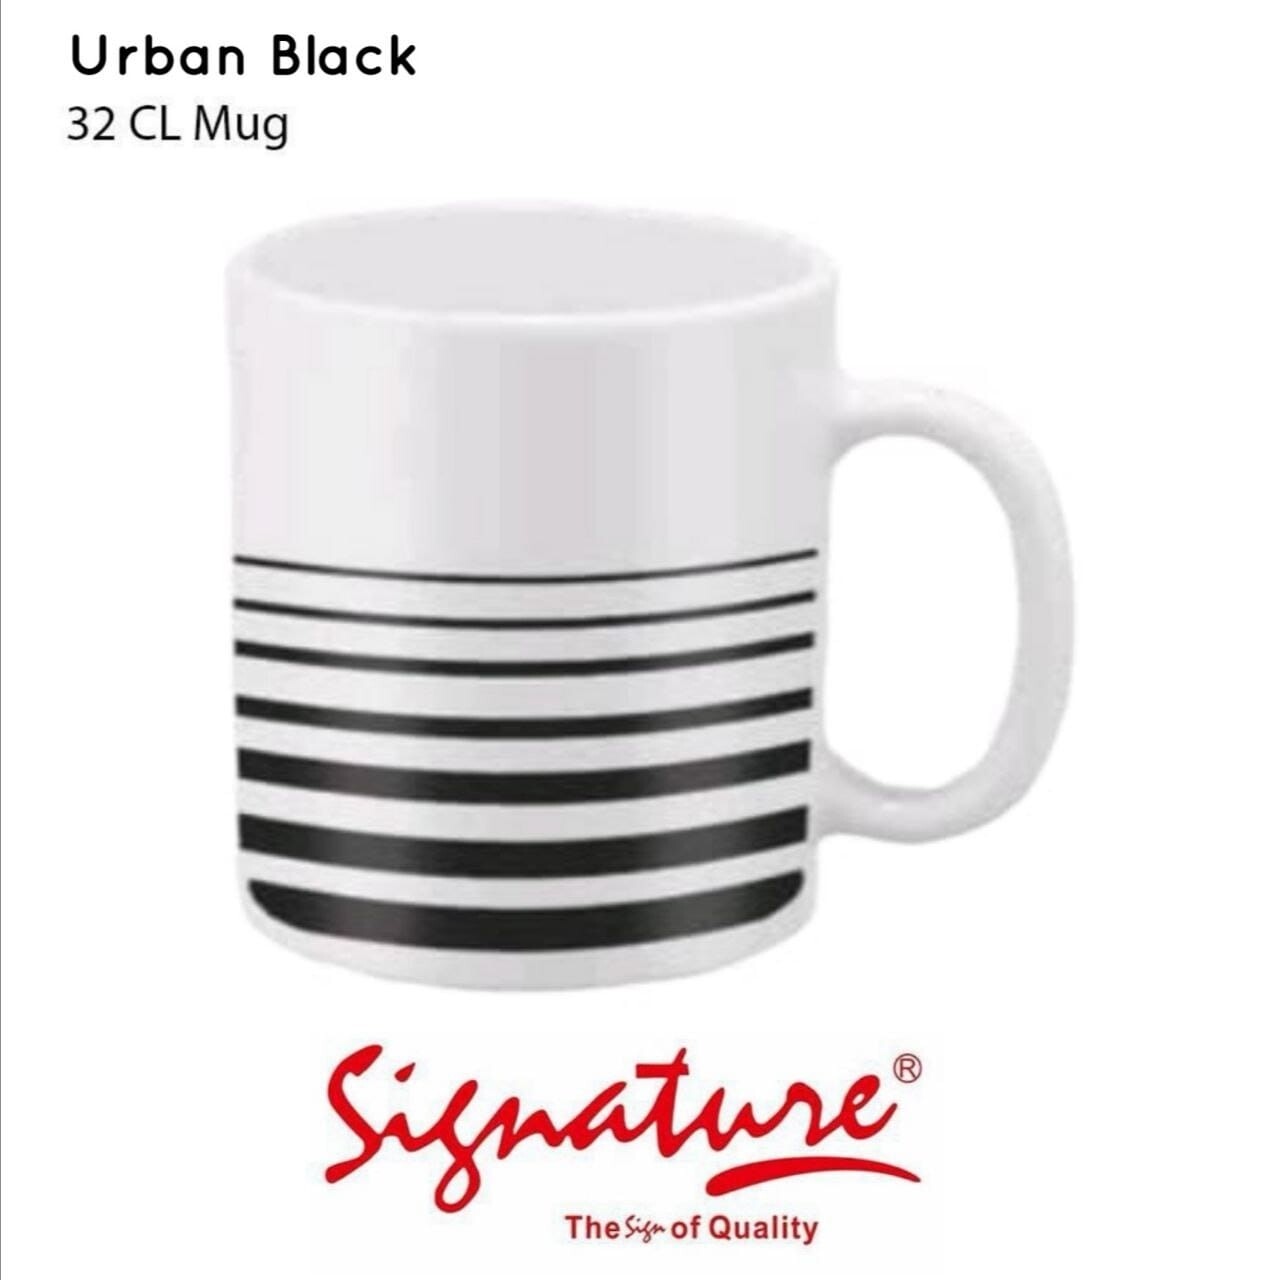 Signature urban black mug 32cl 6pcs